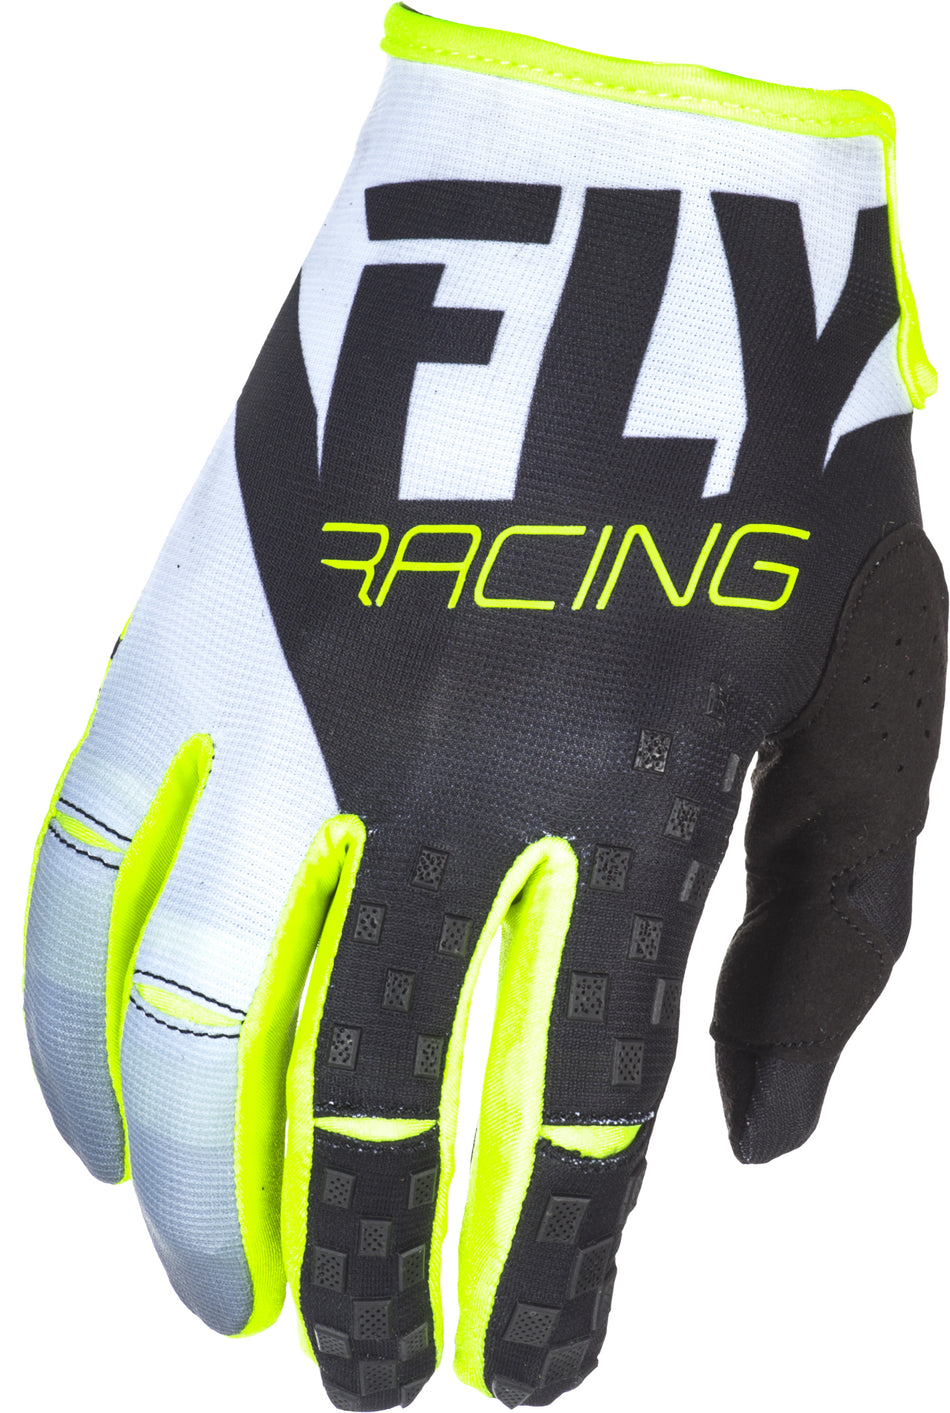 FLY RACING Kinetic Gloves Black/White/Hi-Vis Sz 6 371-41606